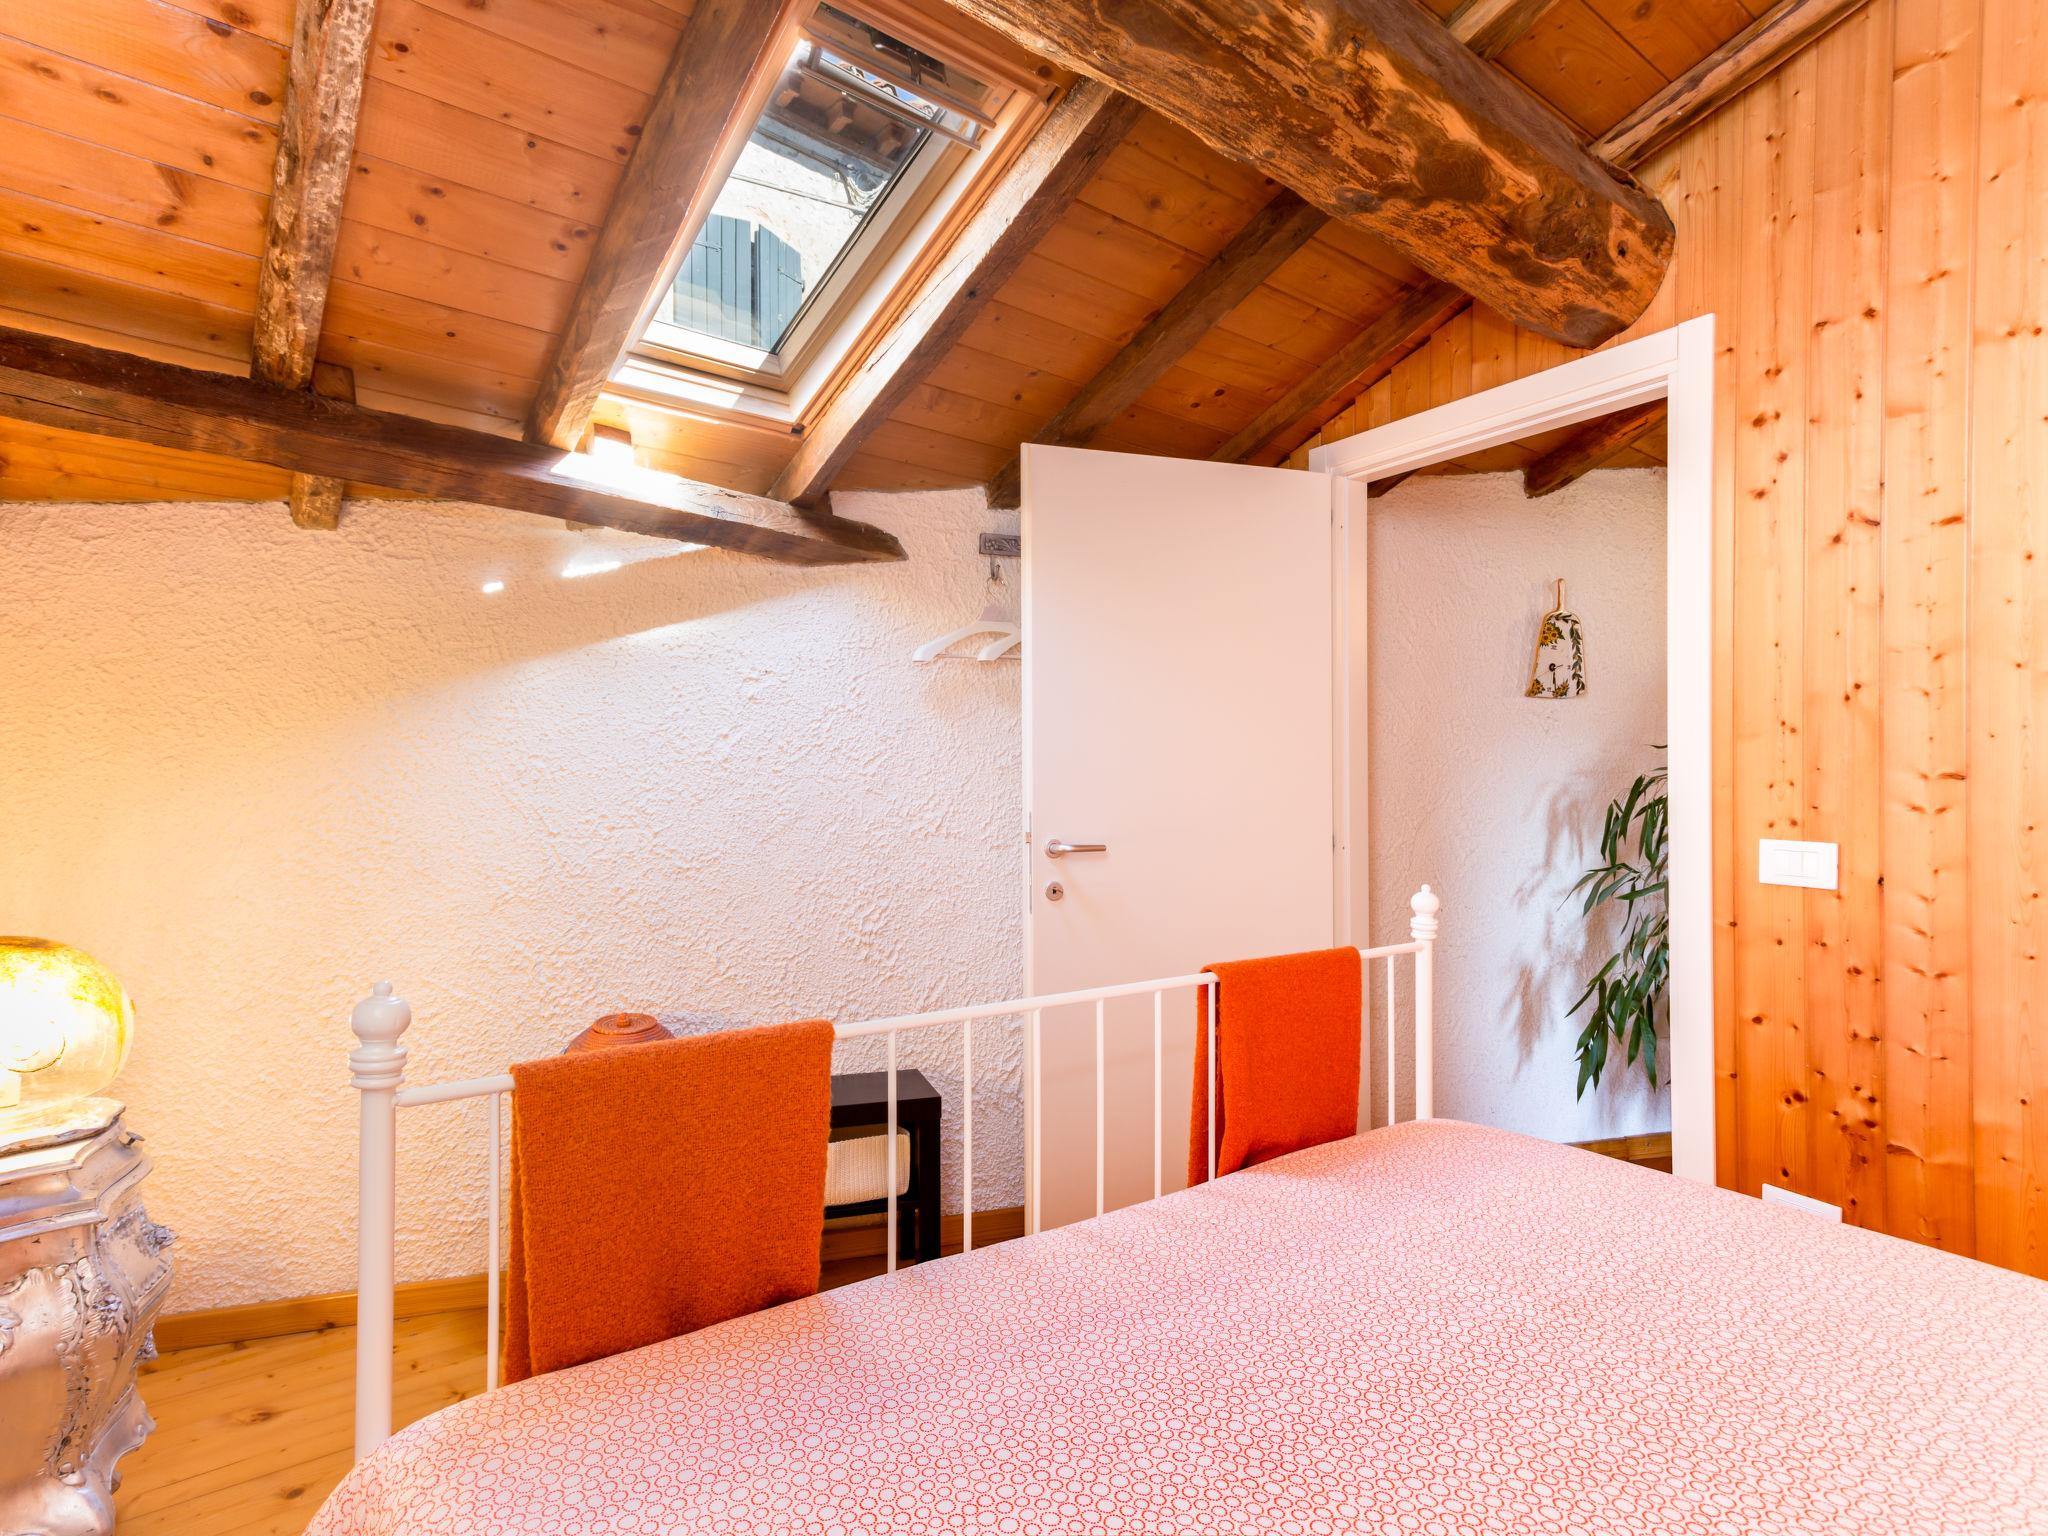 Foto 14 - Haus mit 1 Schlafzimmer in Bagni di Lucca mit privater pool und terrasse